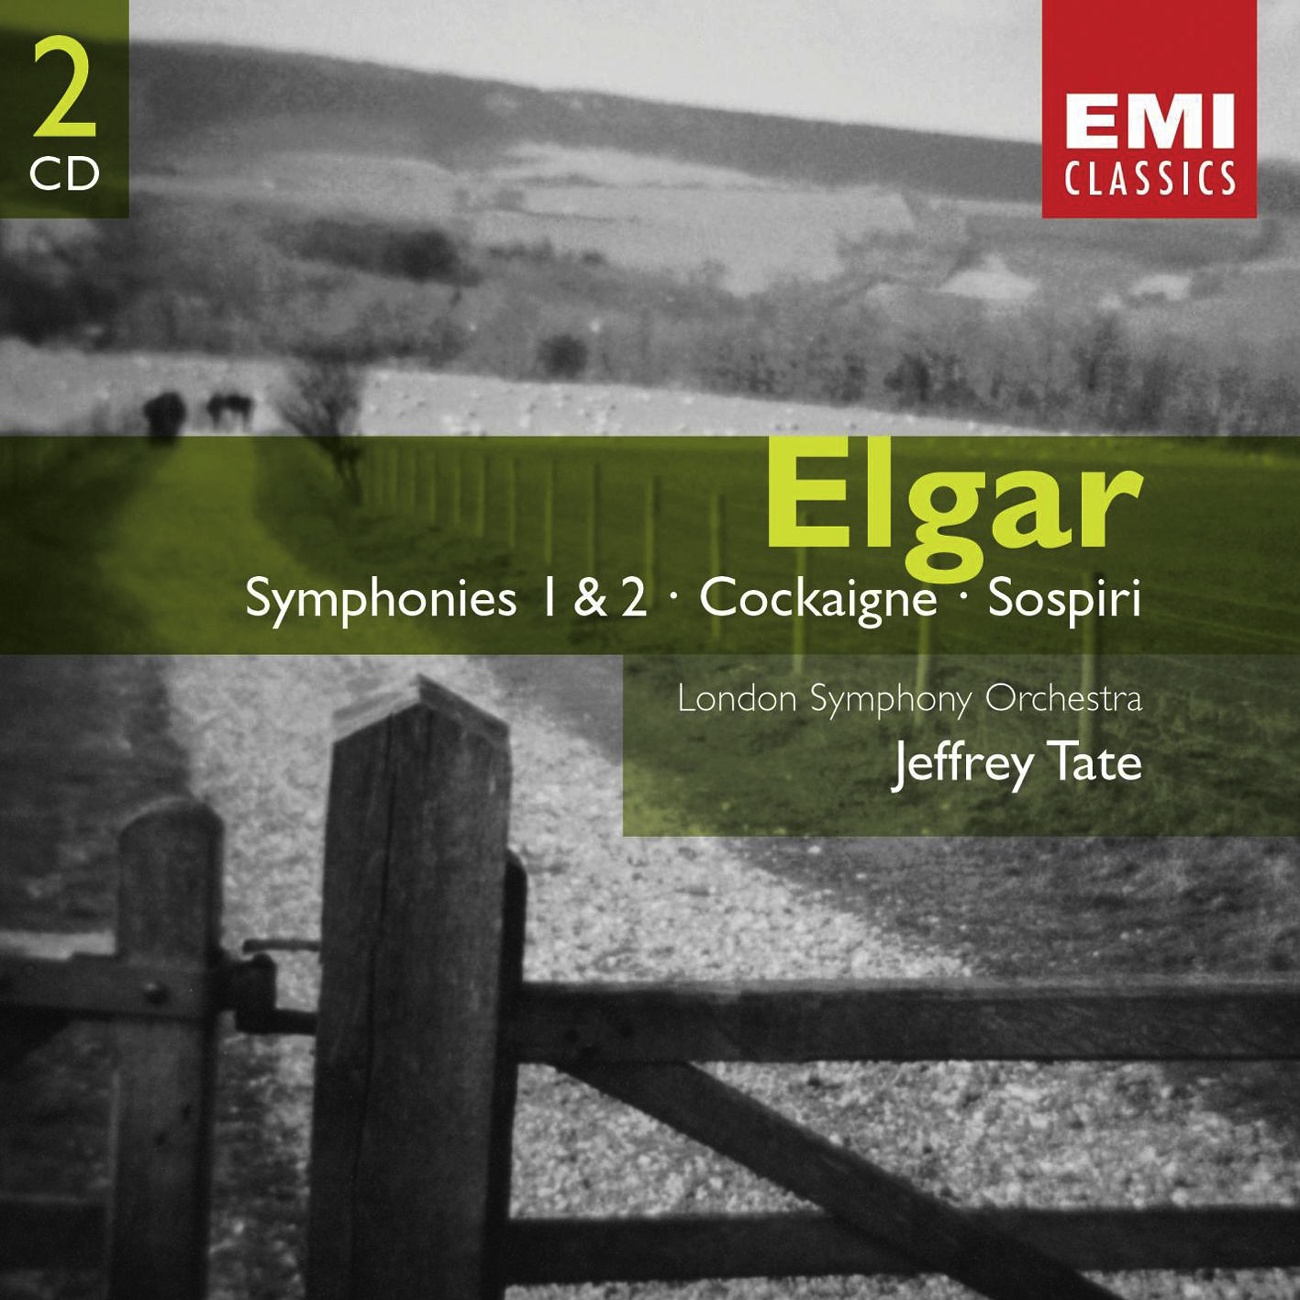 Symphony No. 2 in E flat Op. 63: I.      Allegro vivace e nobilmente